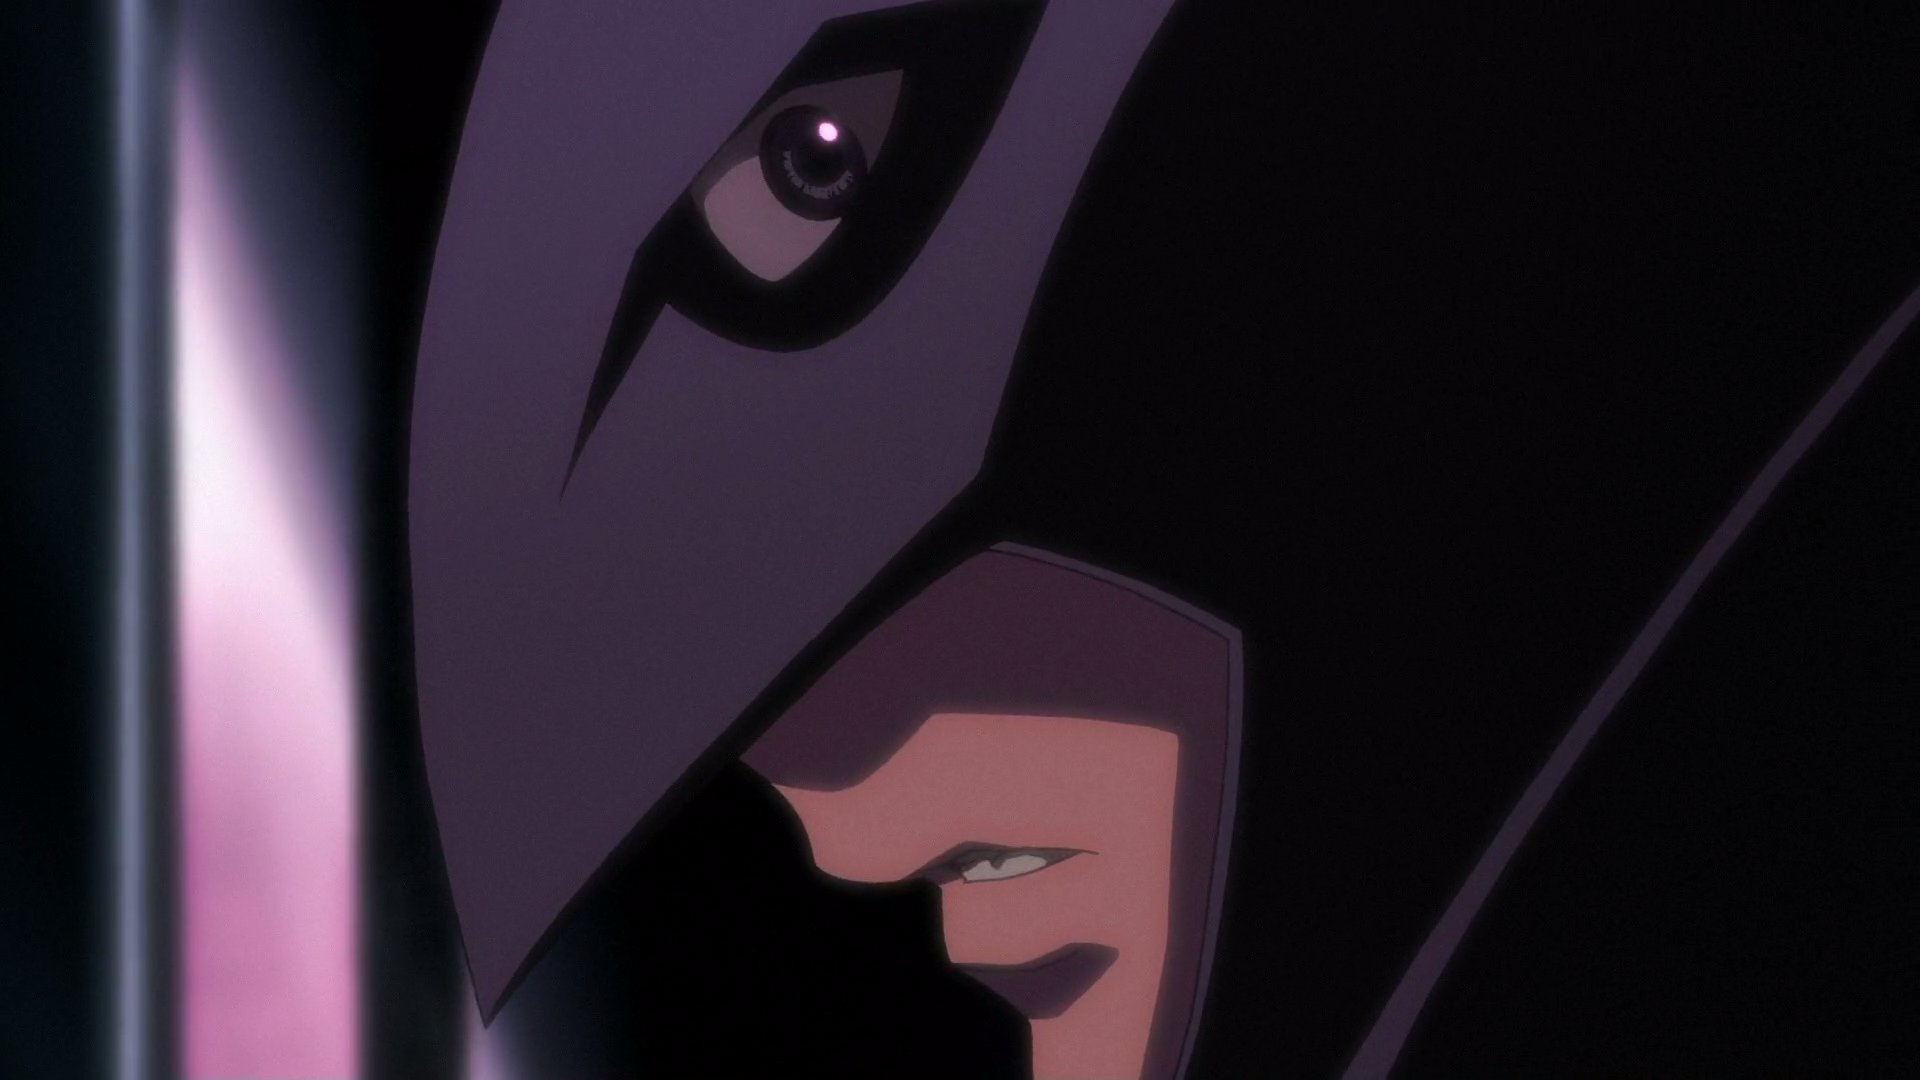 Batman Gotham Knight BluRay 1080p AC3 ITA ENG JAP.mkv_snapshot_00.33.26_[2011.04.08_15.29.58].png